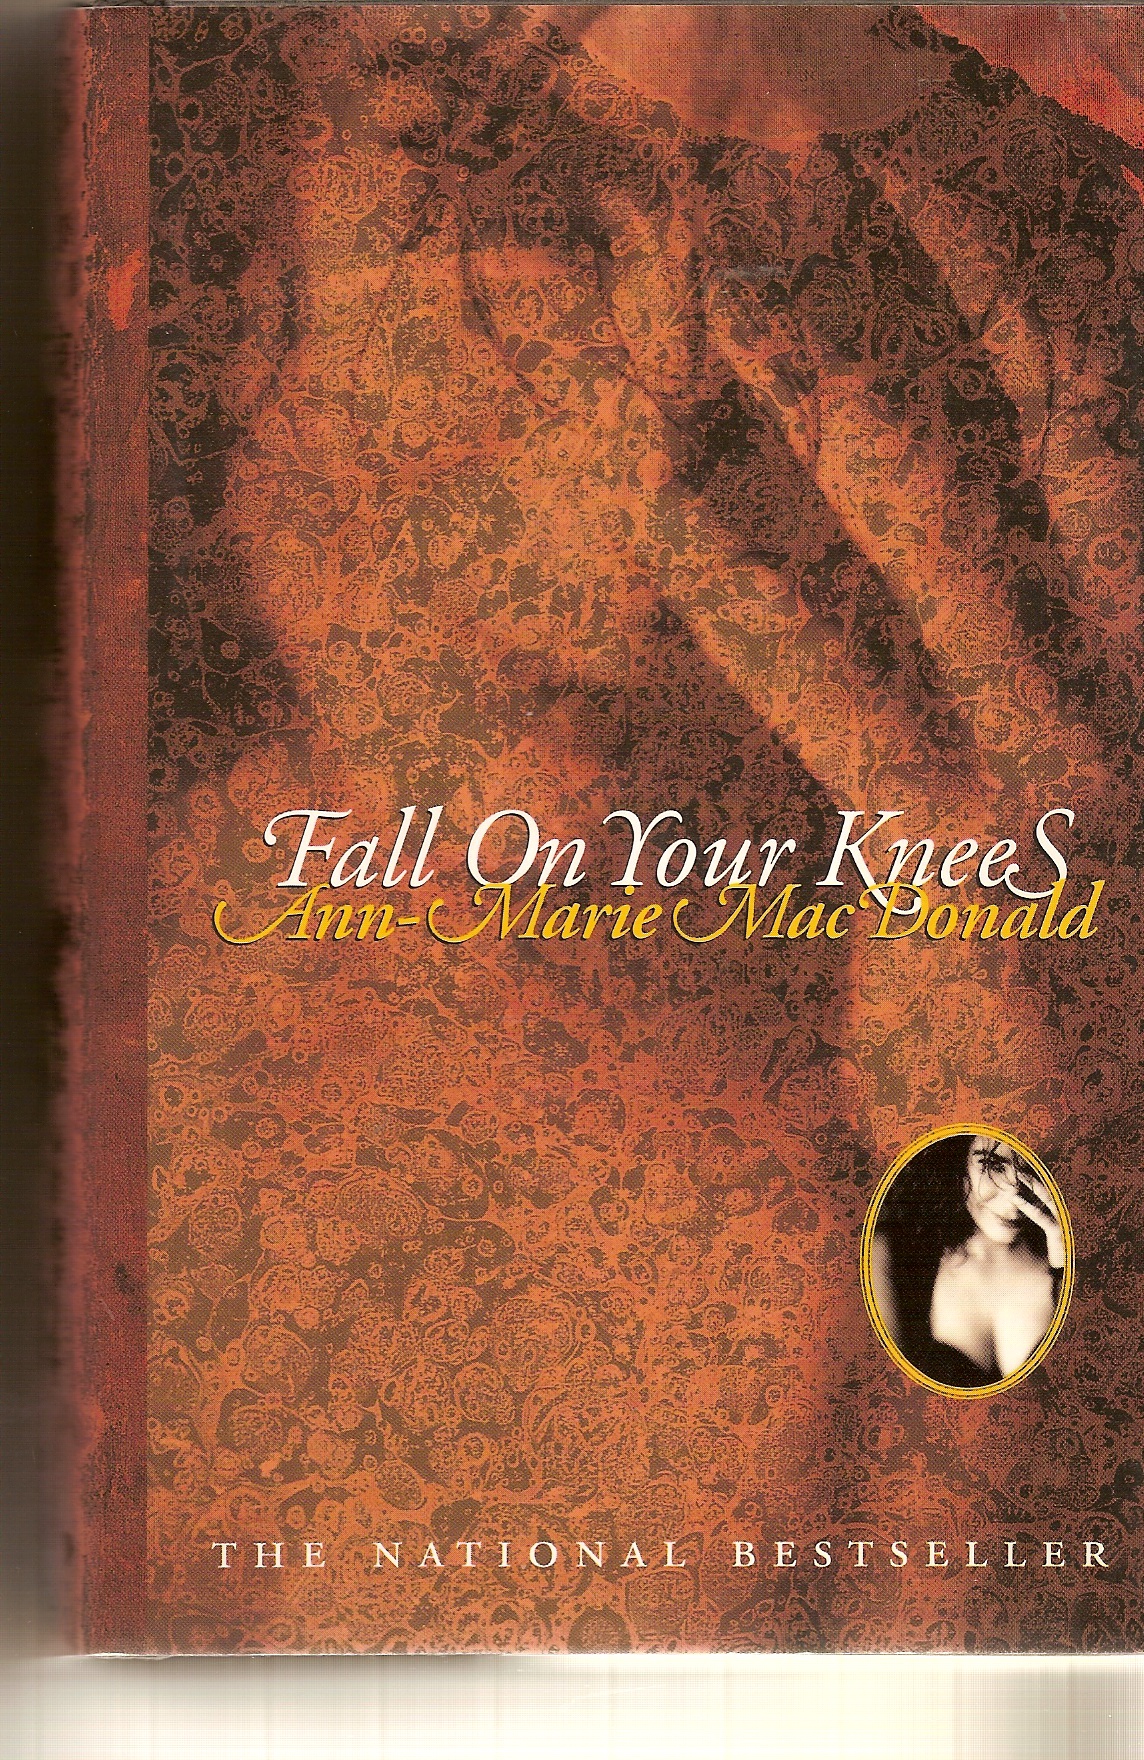 MACDONALD ANN-MARIE - Fall on Your Knees